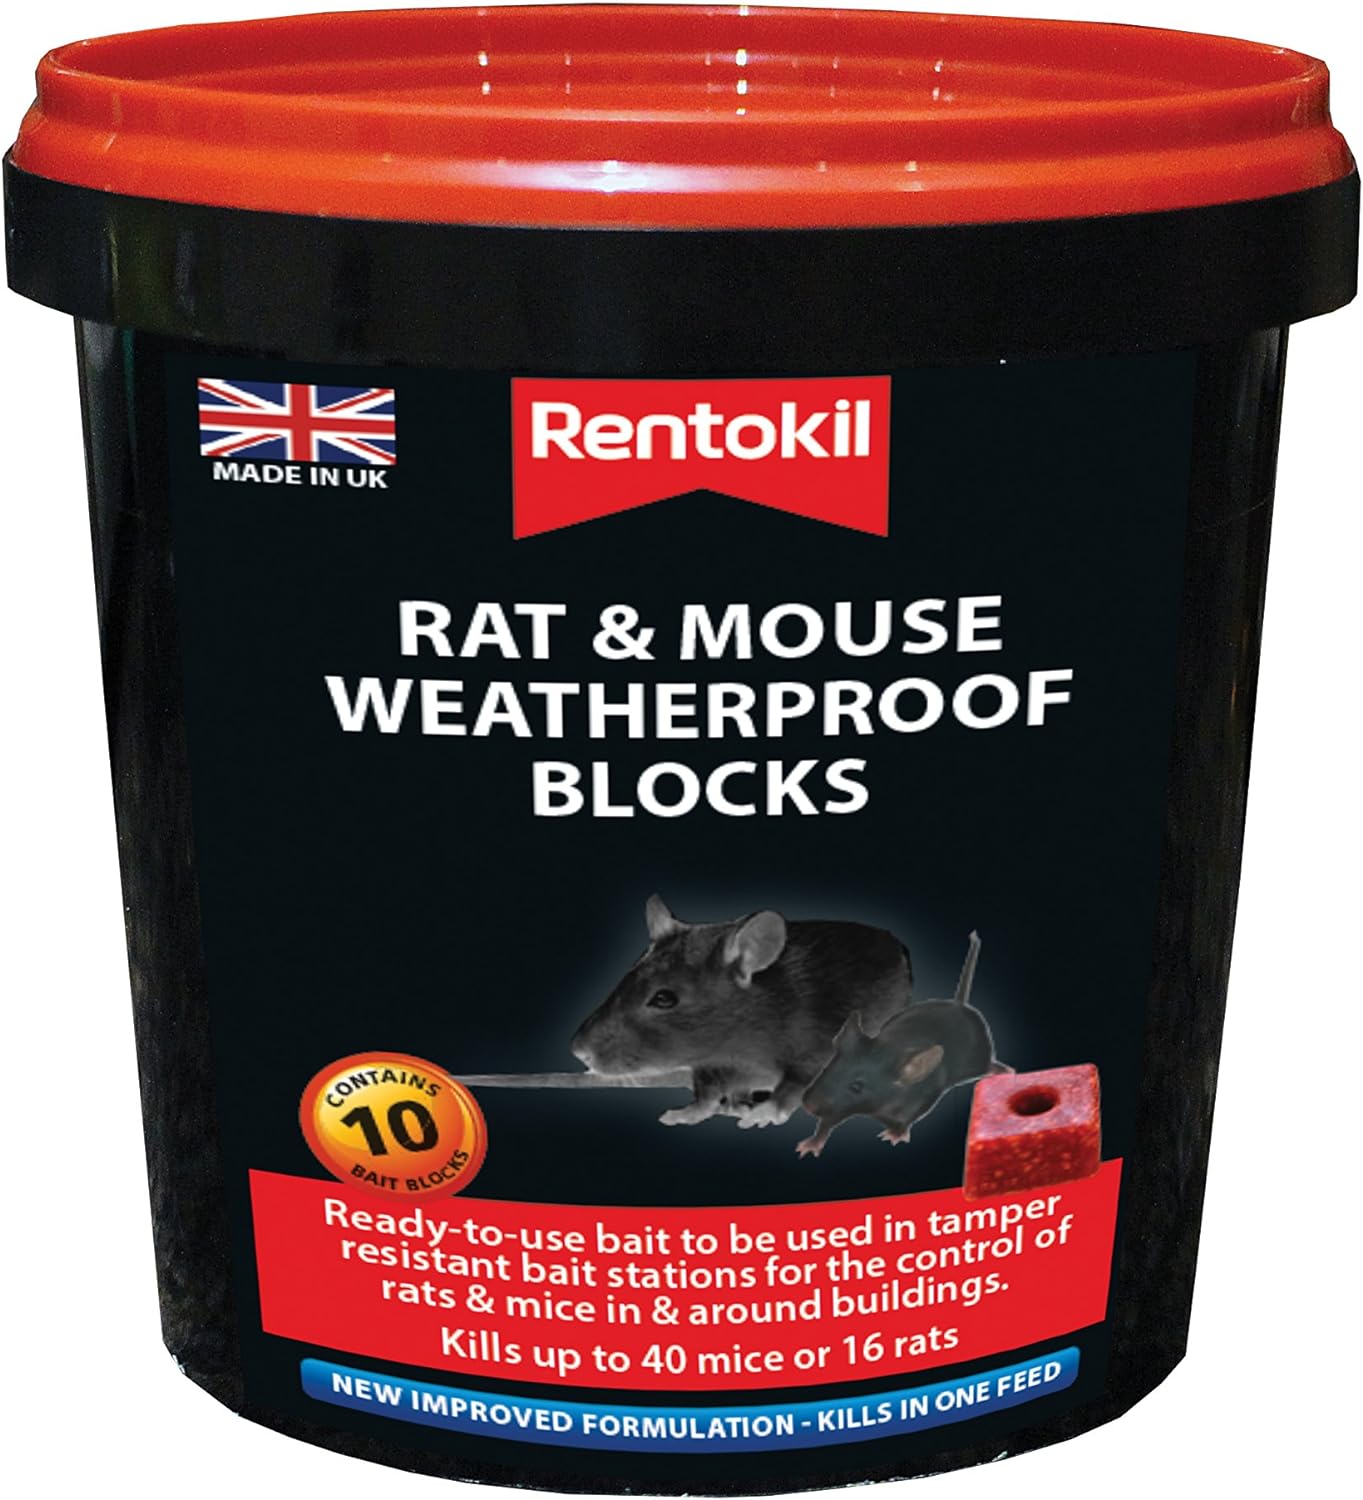 Rentokil Mouse & Rat Weatherproof Blocks - Pack of 10 Sachet